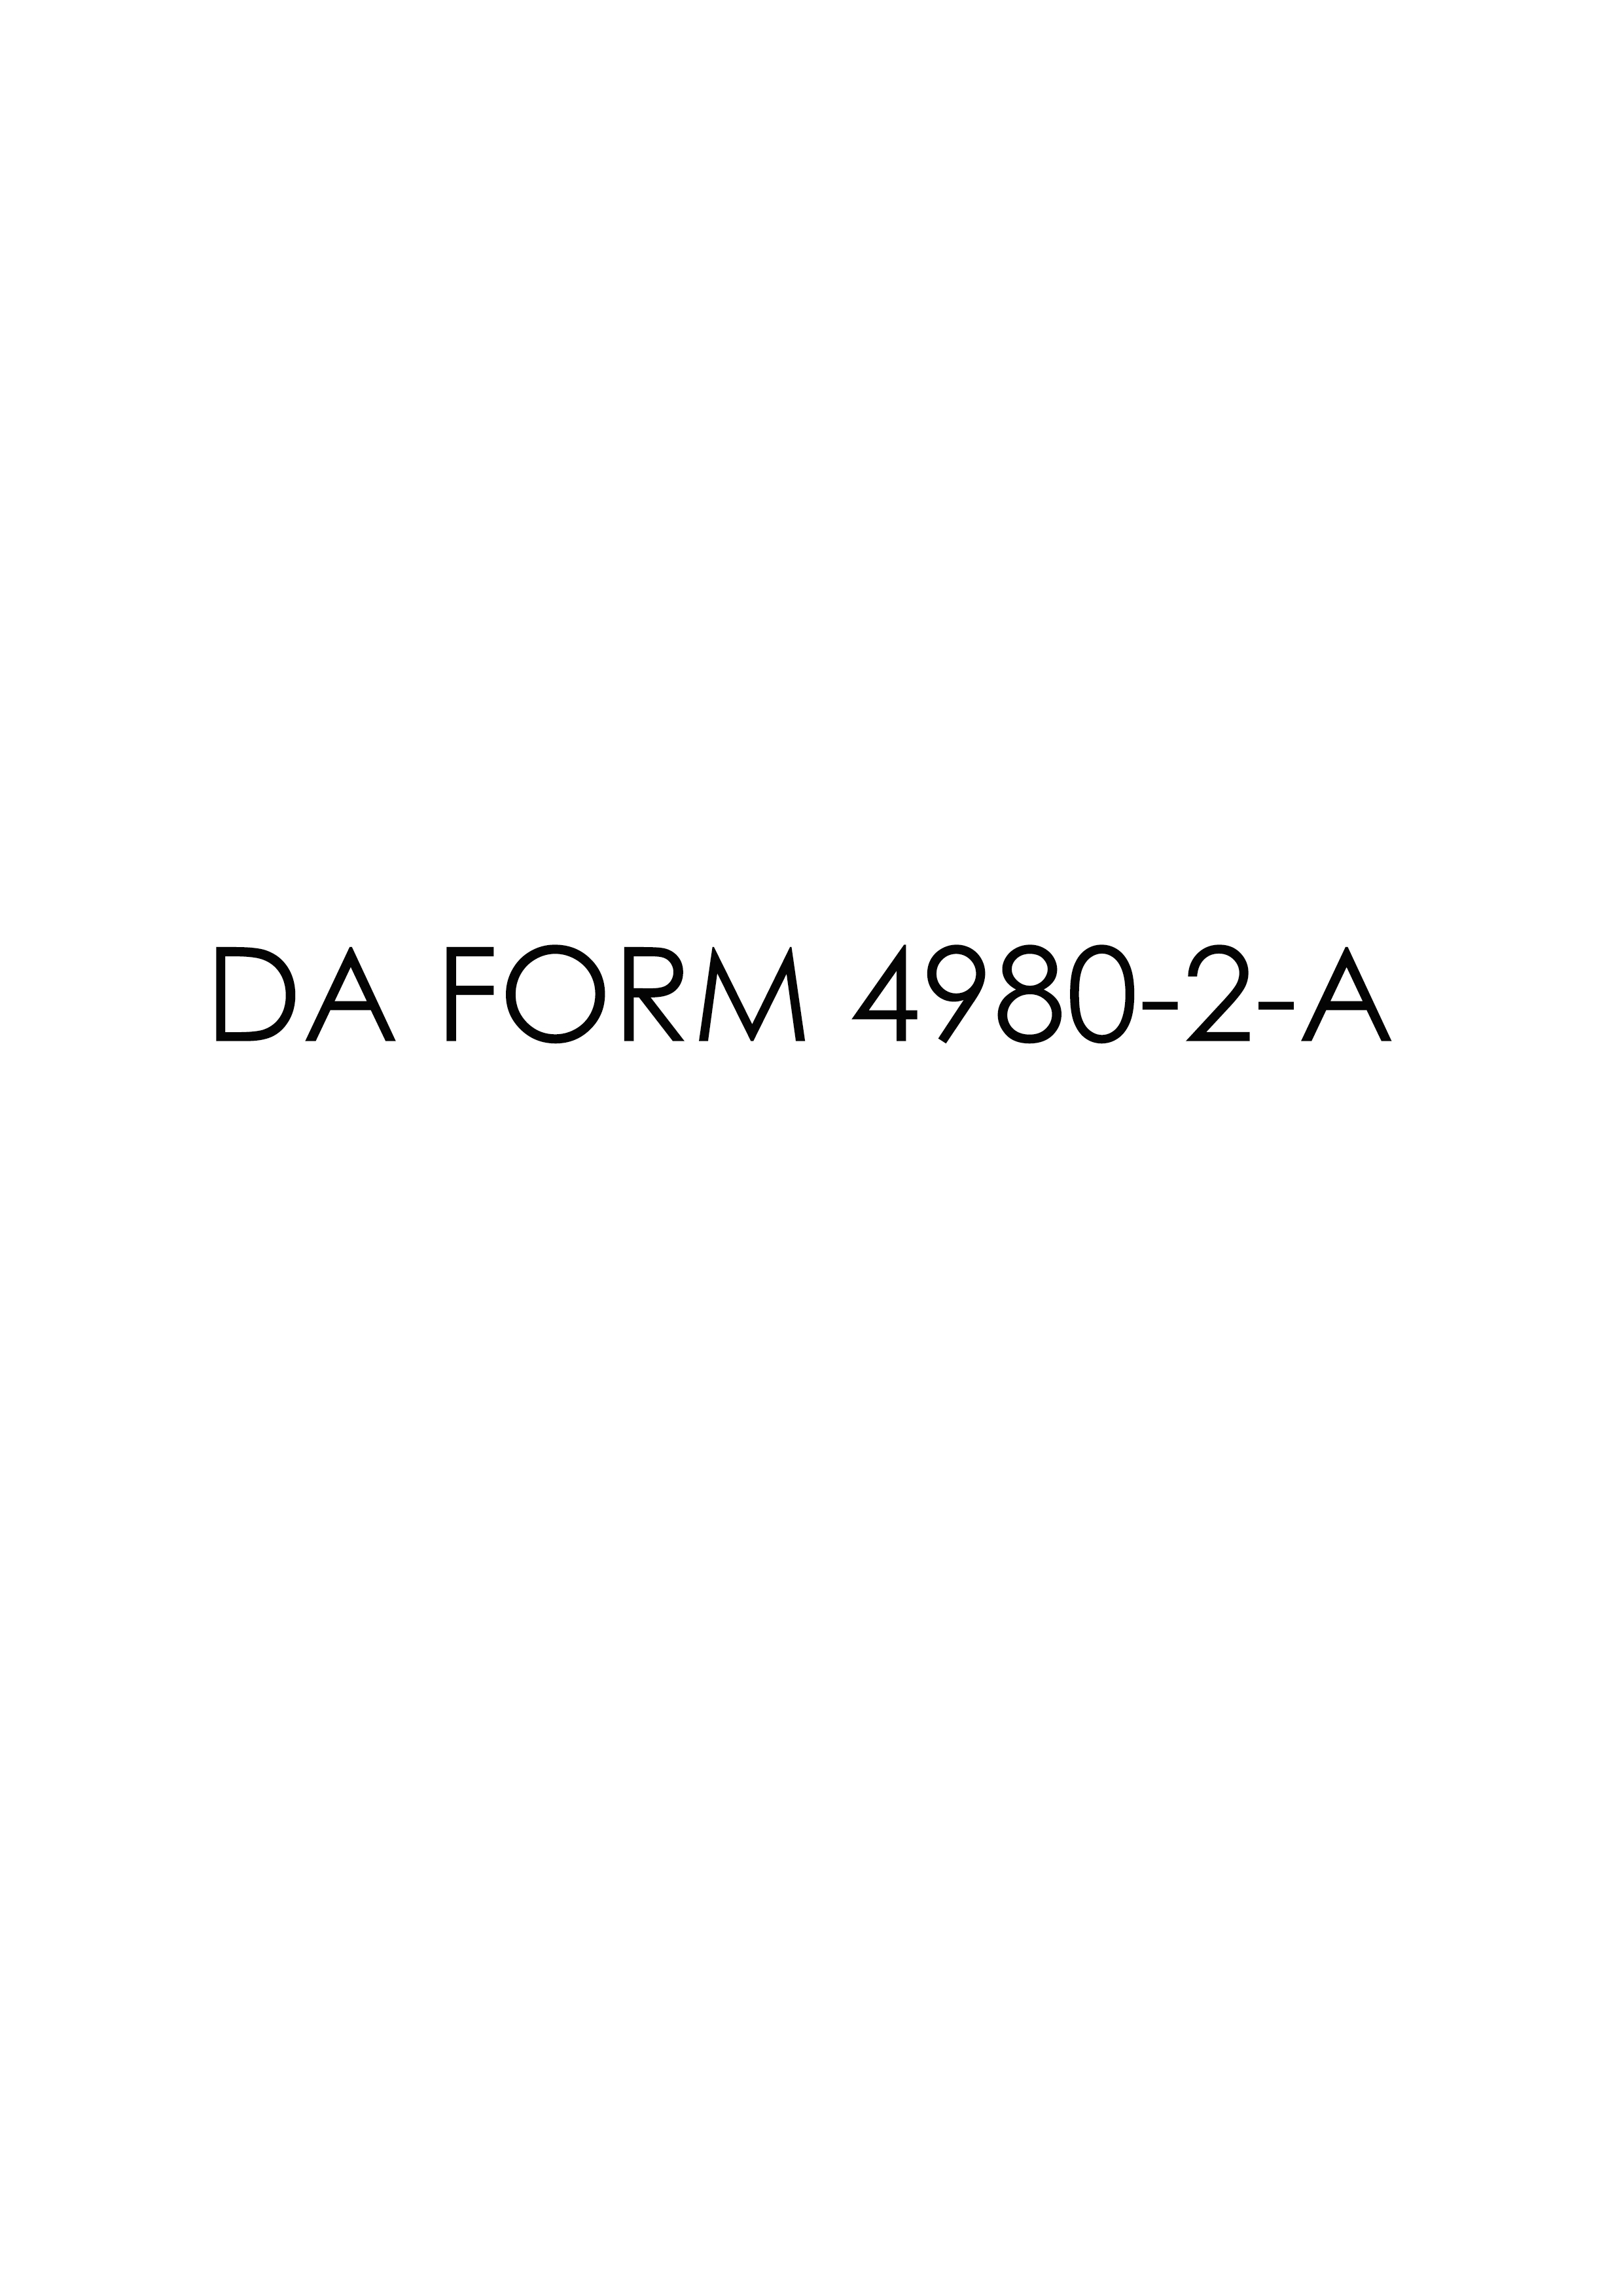 da Form 4980-2-A fillable